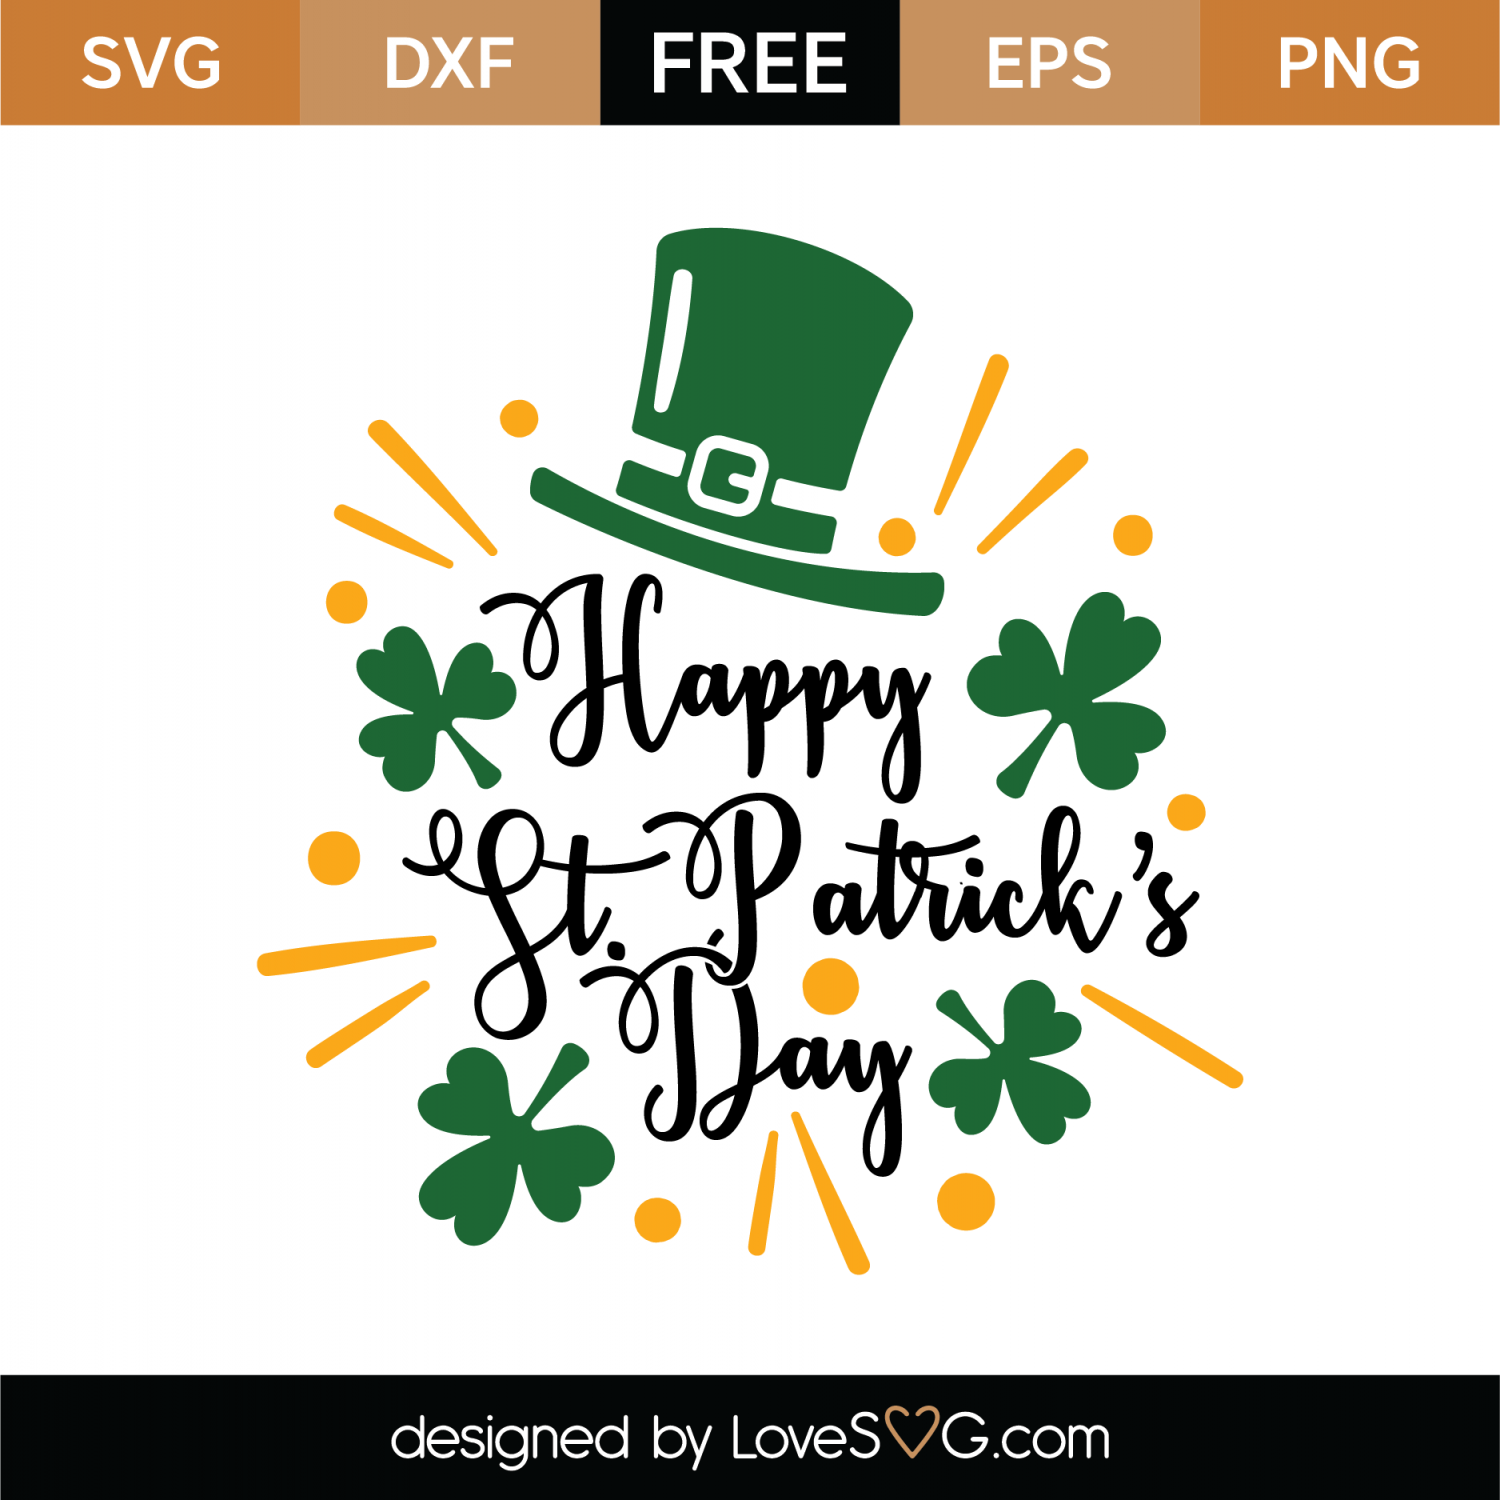 Download Free Happy St Patrick's Day SVG Cut File | Lovesvg.com